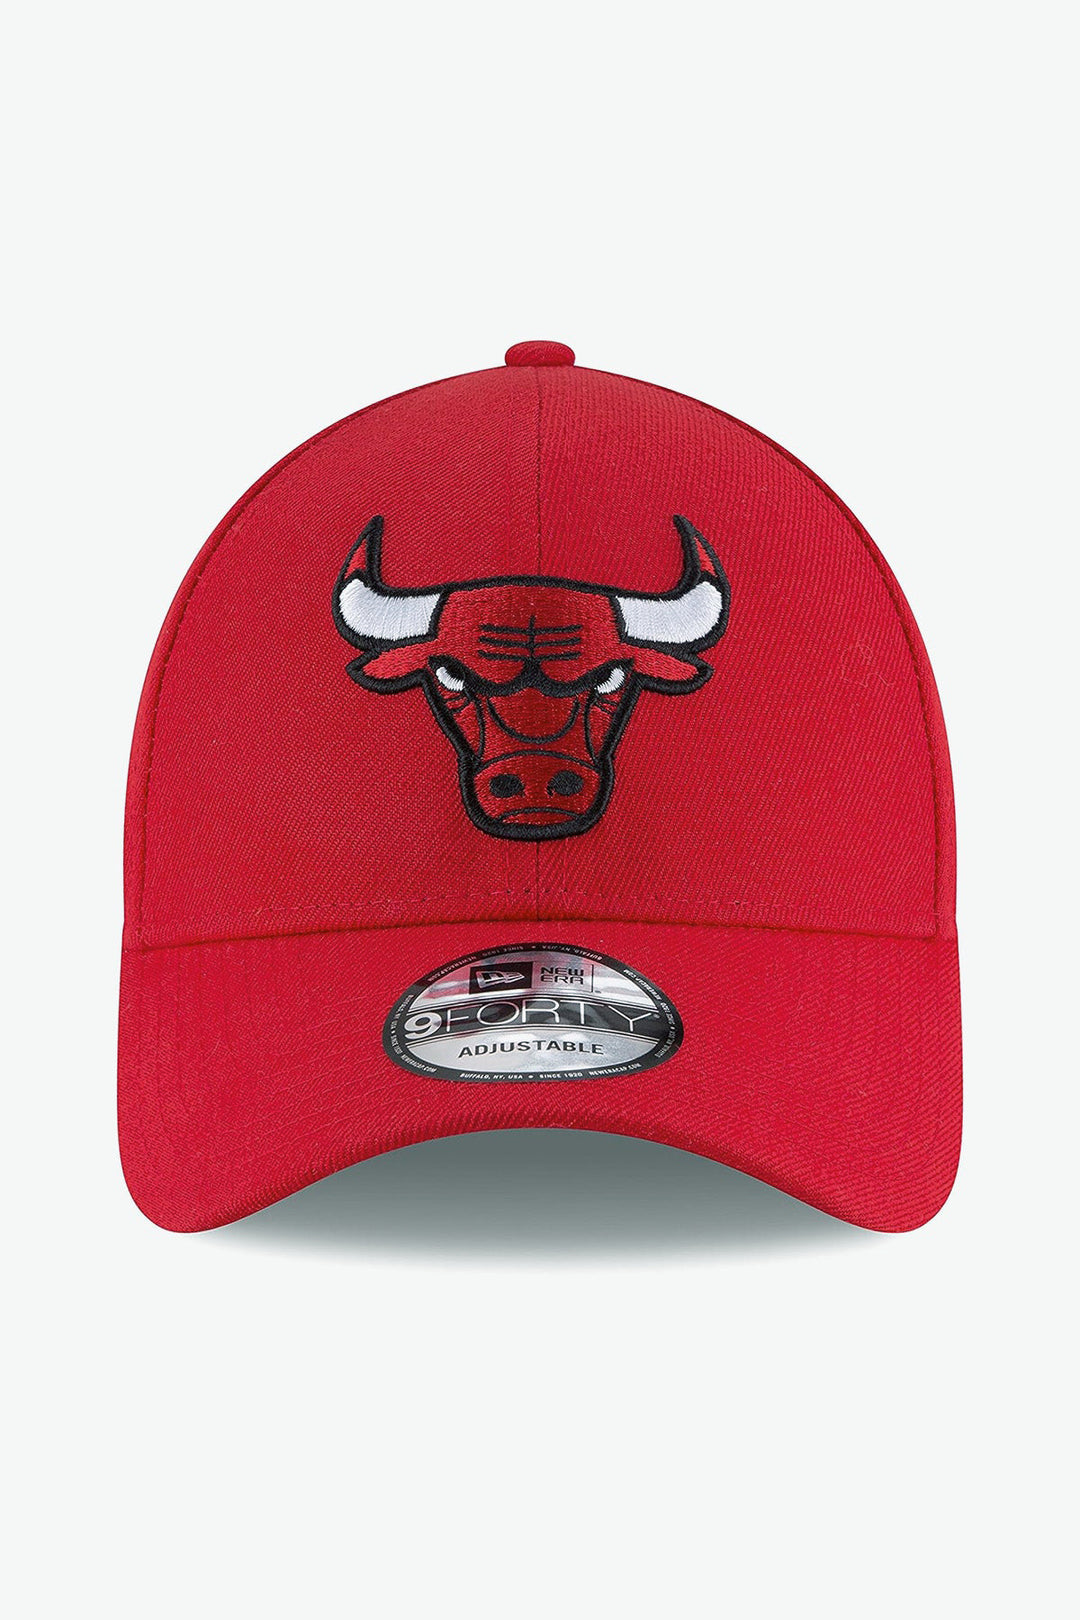 Red Chicago Bulls Baseball Cap - S23 - MCP120R